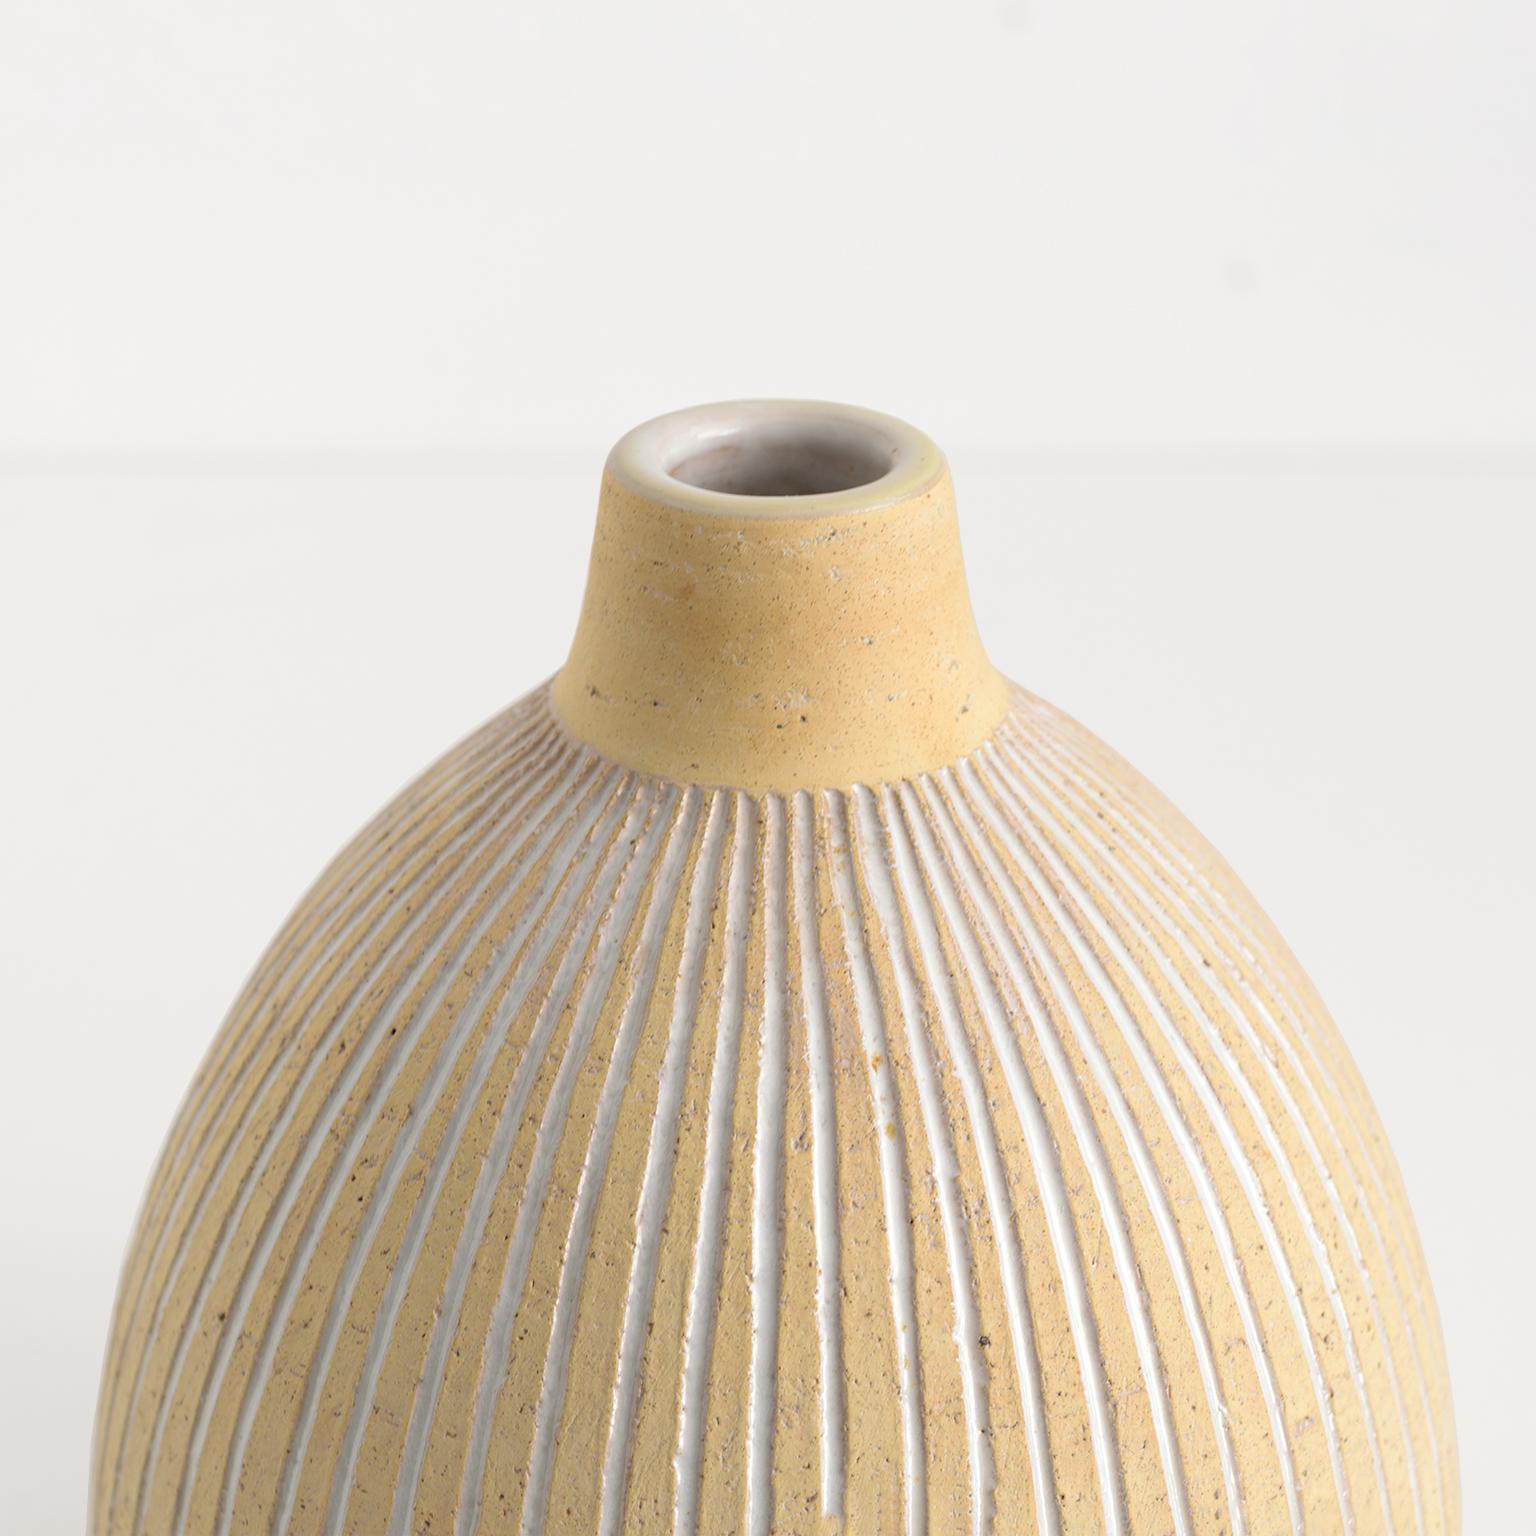 20th Century Edgar Bòckman Scandinavian Modern Partial Glazed Ceramic Vase for Hoganas, 1940 For Sale